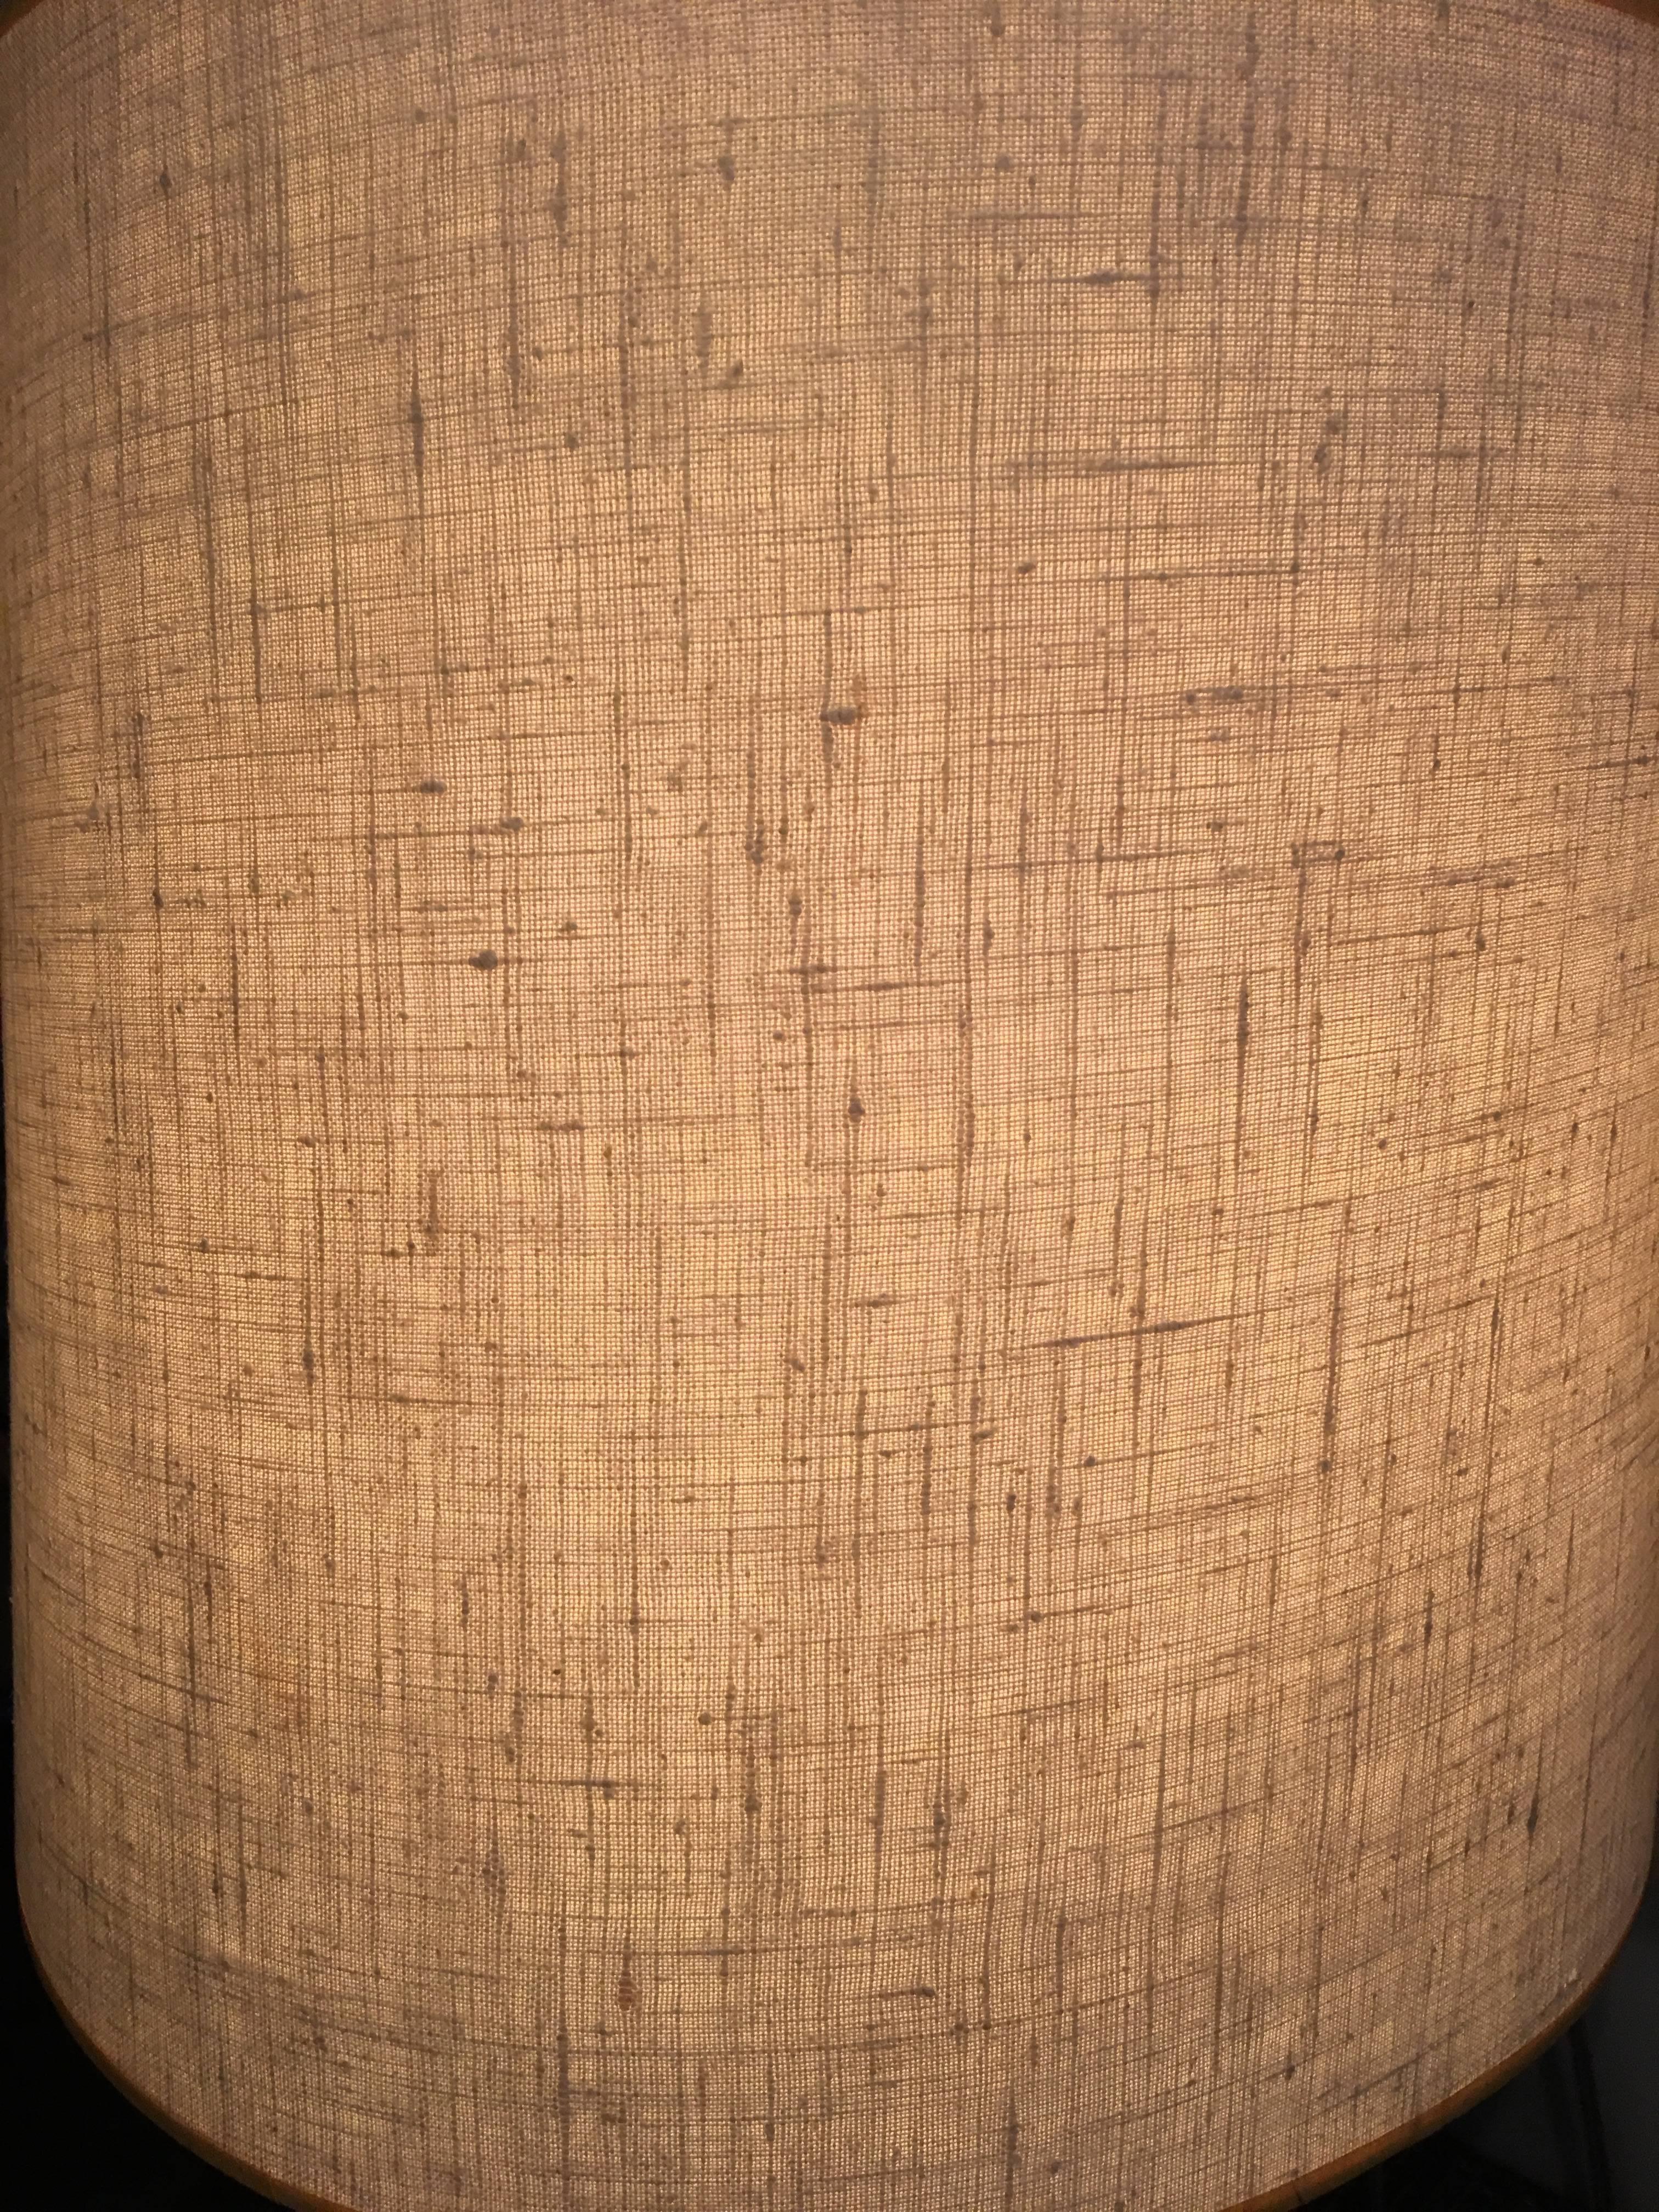 20th Century Scandinavian Modern Rosewood Floor Lamp